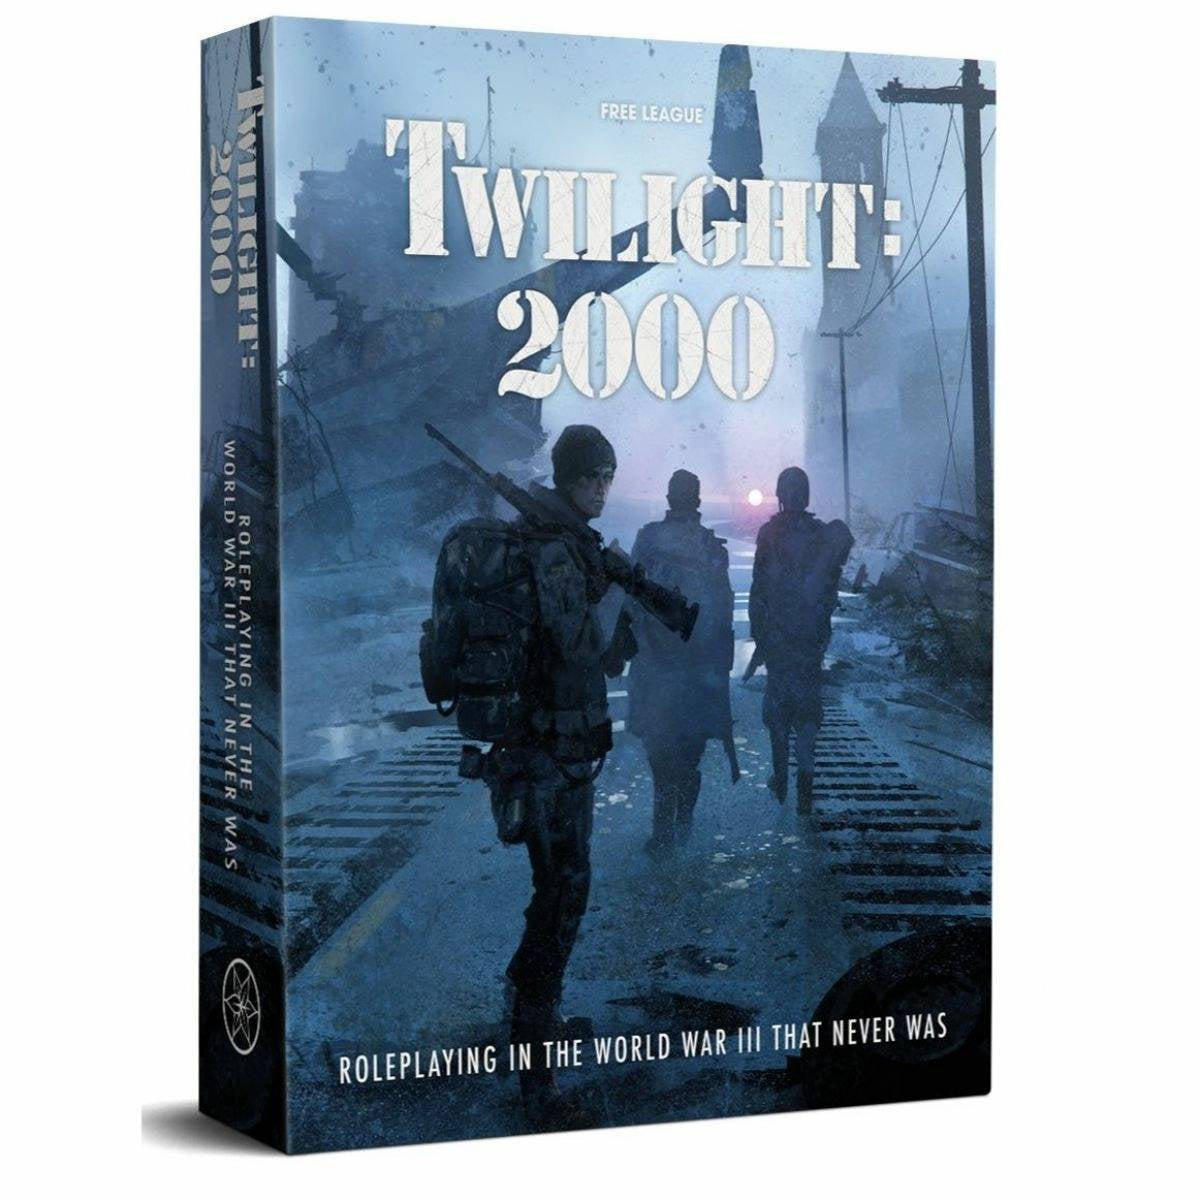 Twilight 2000 RPG Core Box